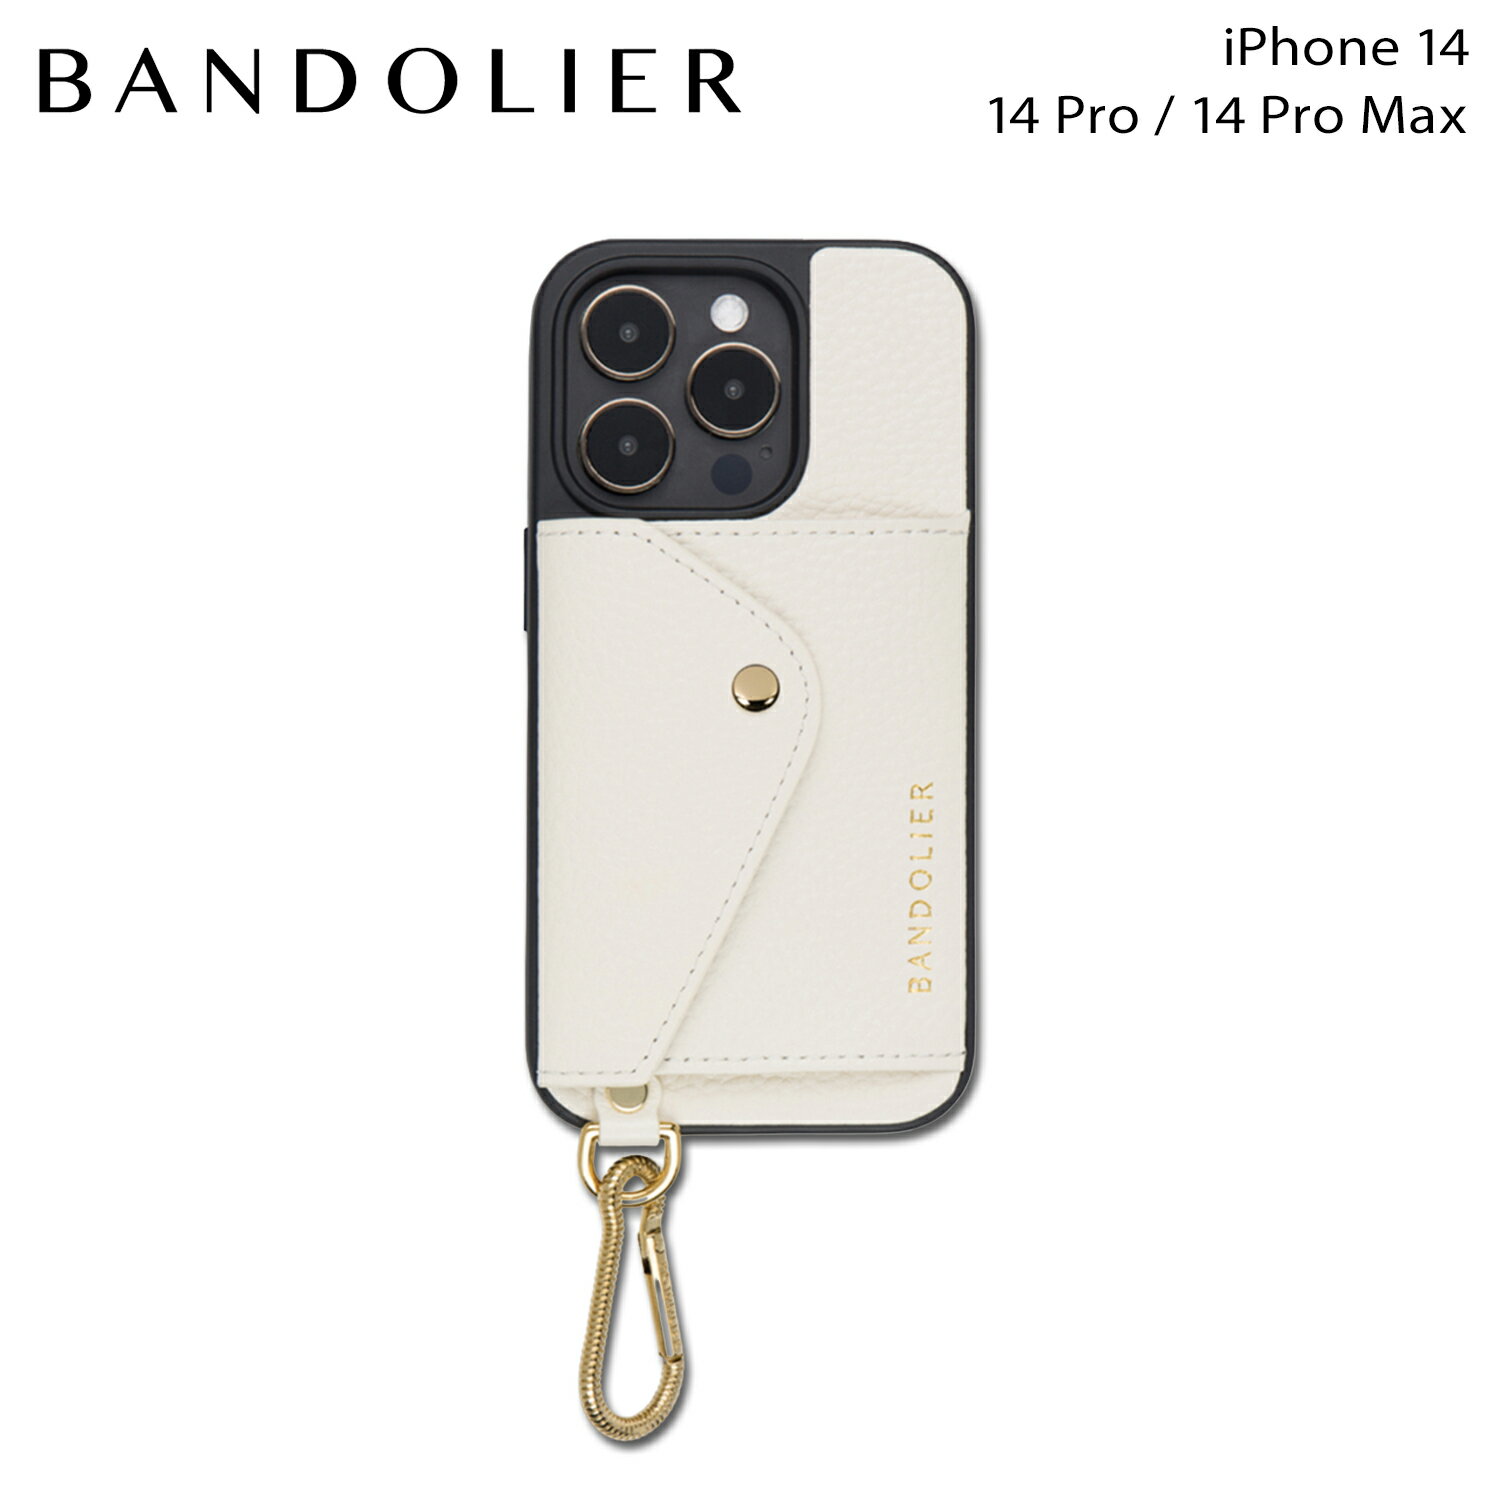 BANDOLIER RYDER CARABINER IVORY バンドリヤー iPhone 14 14Pro iPhone 14 Pro Max スマホケース 携帯 アイフォン キーホルダー キーリング メンズ レディース RYDER CARABINER IVORY ホワイト 白 14RYD